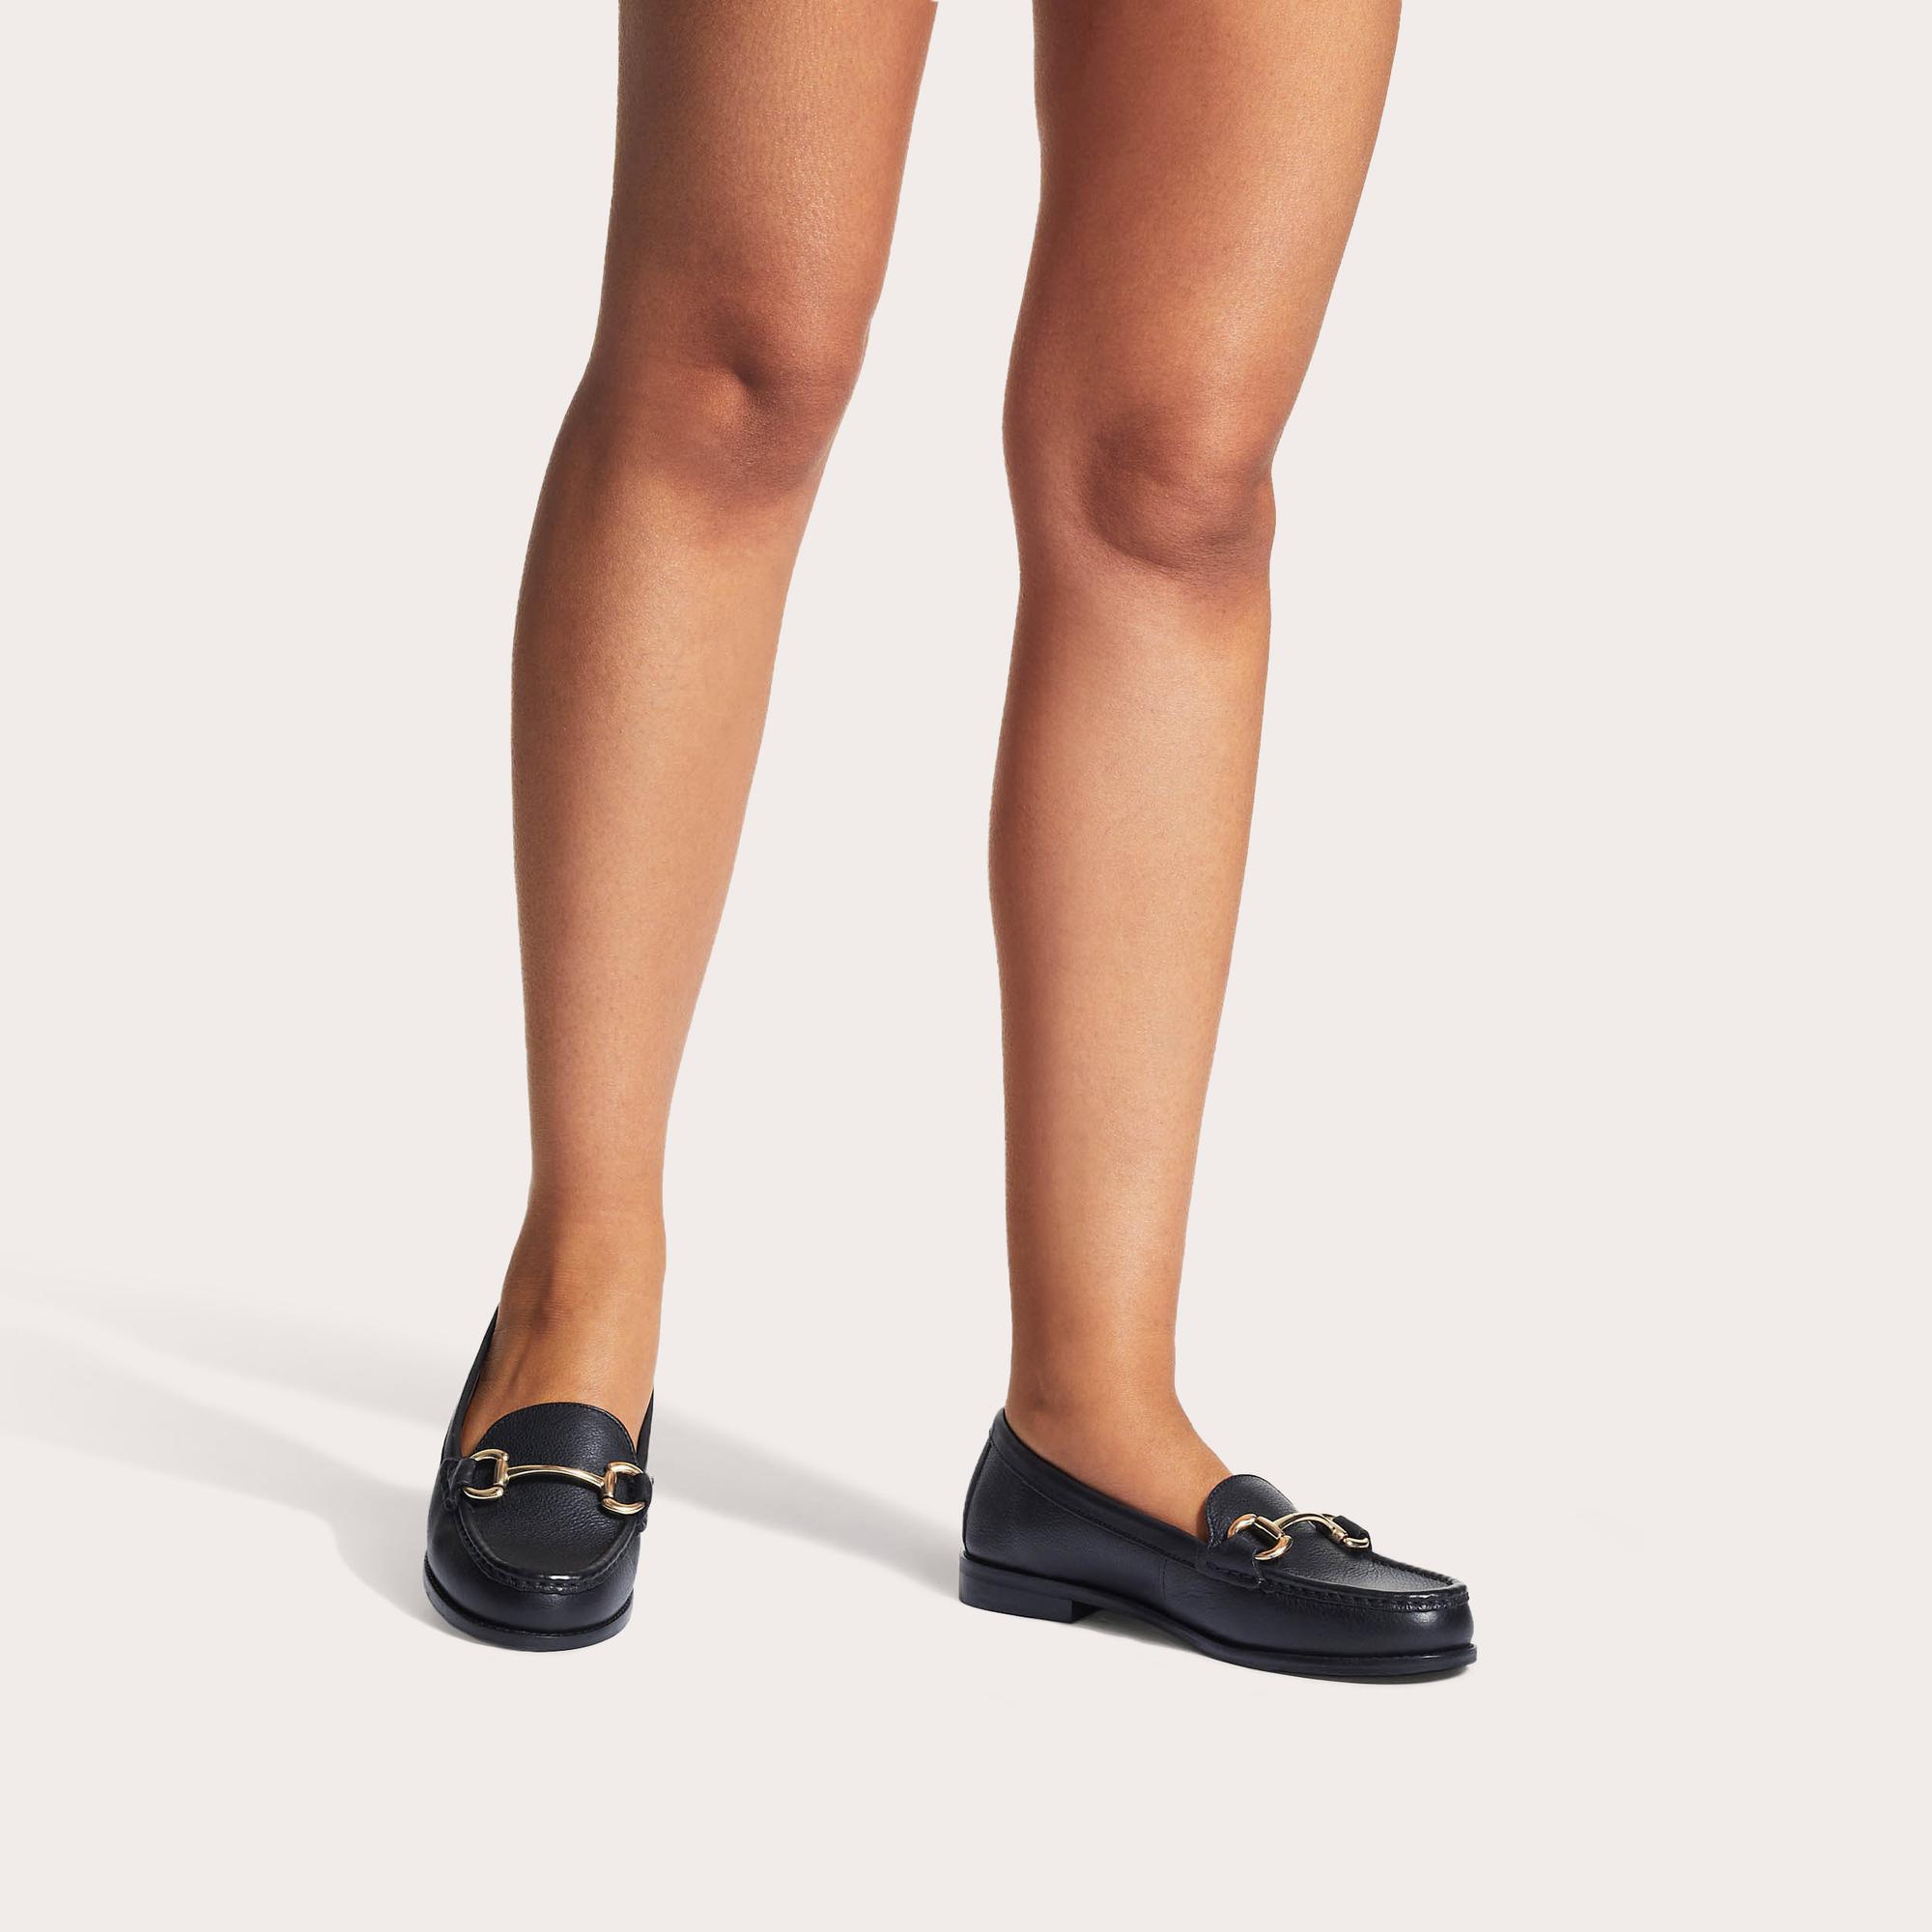 SNAP Black Leather Slip On Loafers by CARVELA COMFORT